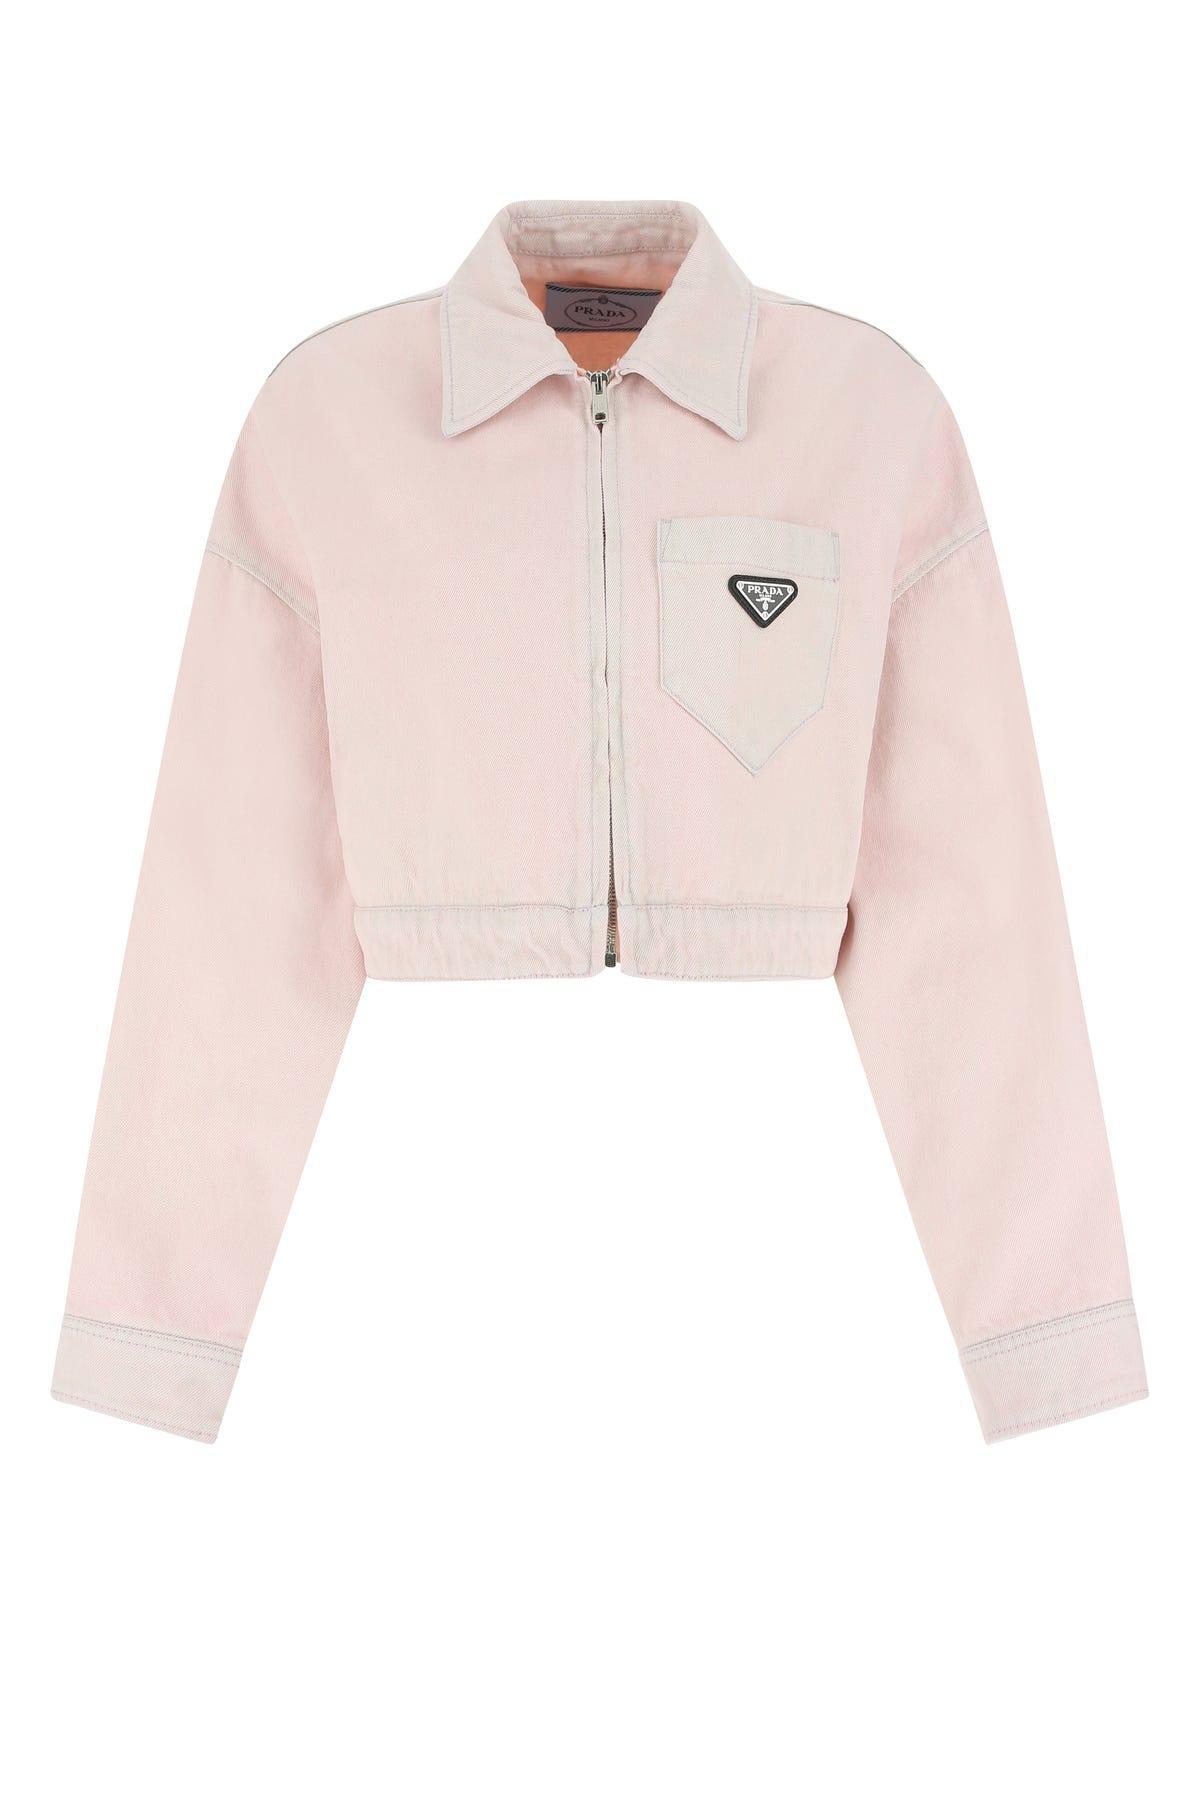 Prada Pastel Denim Oversize Jacket in Pink | Lyst